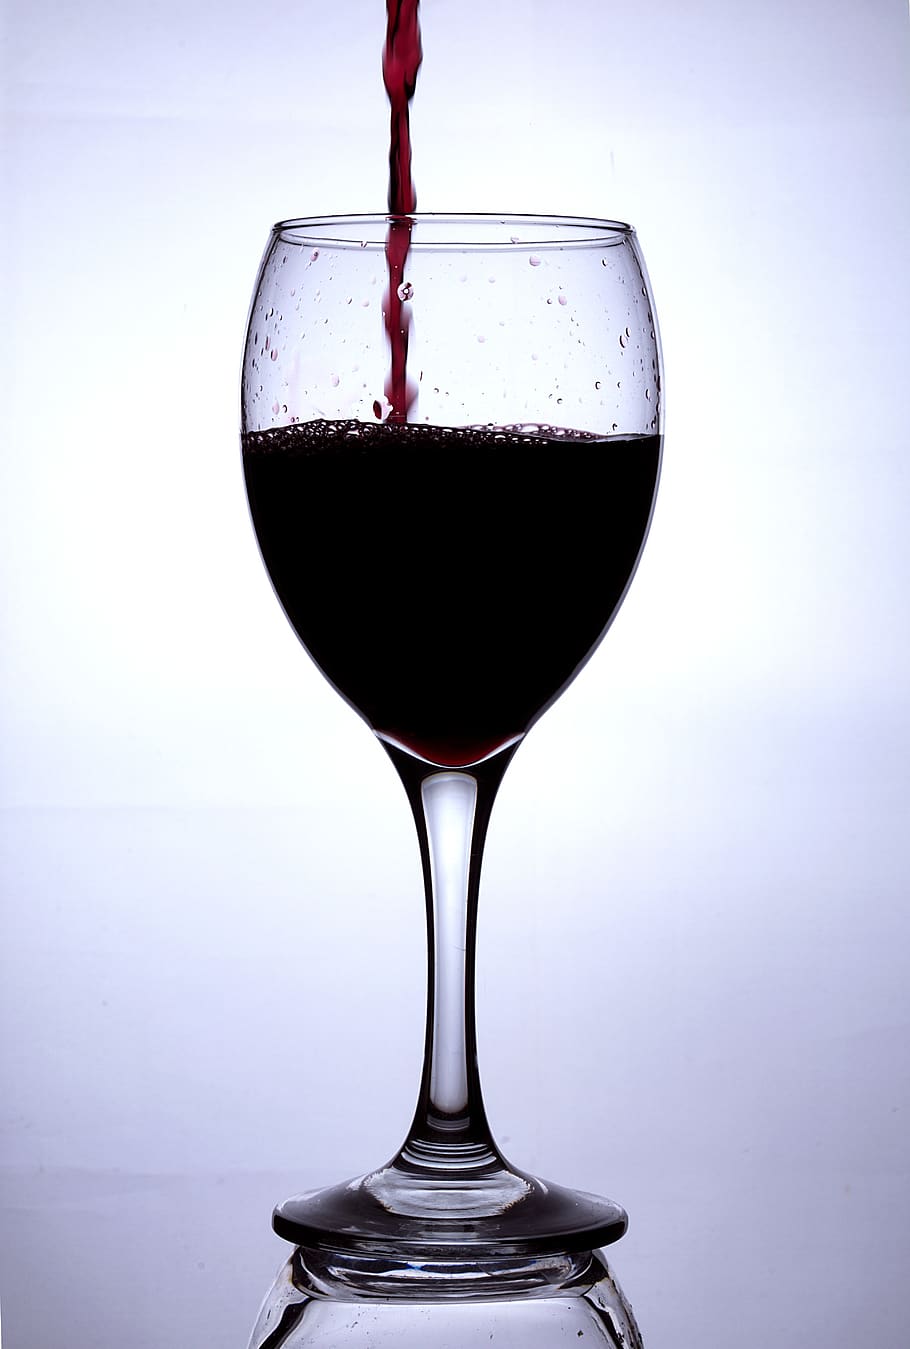 copa de vino, vino tinto, vino, vidrio, colada, naturaleza muerta, beber, refresco, vaso, comida y bebida